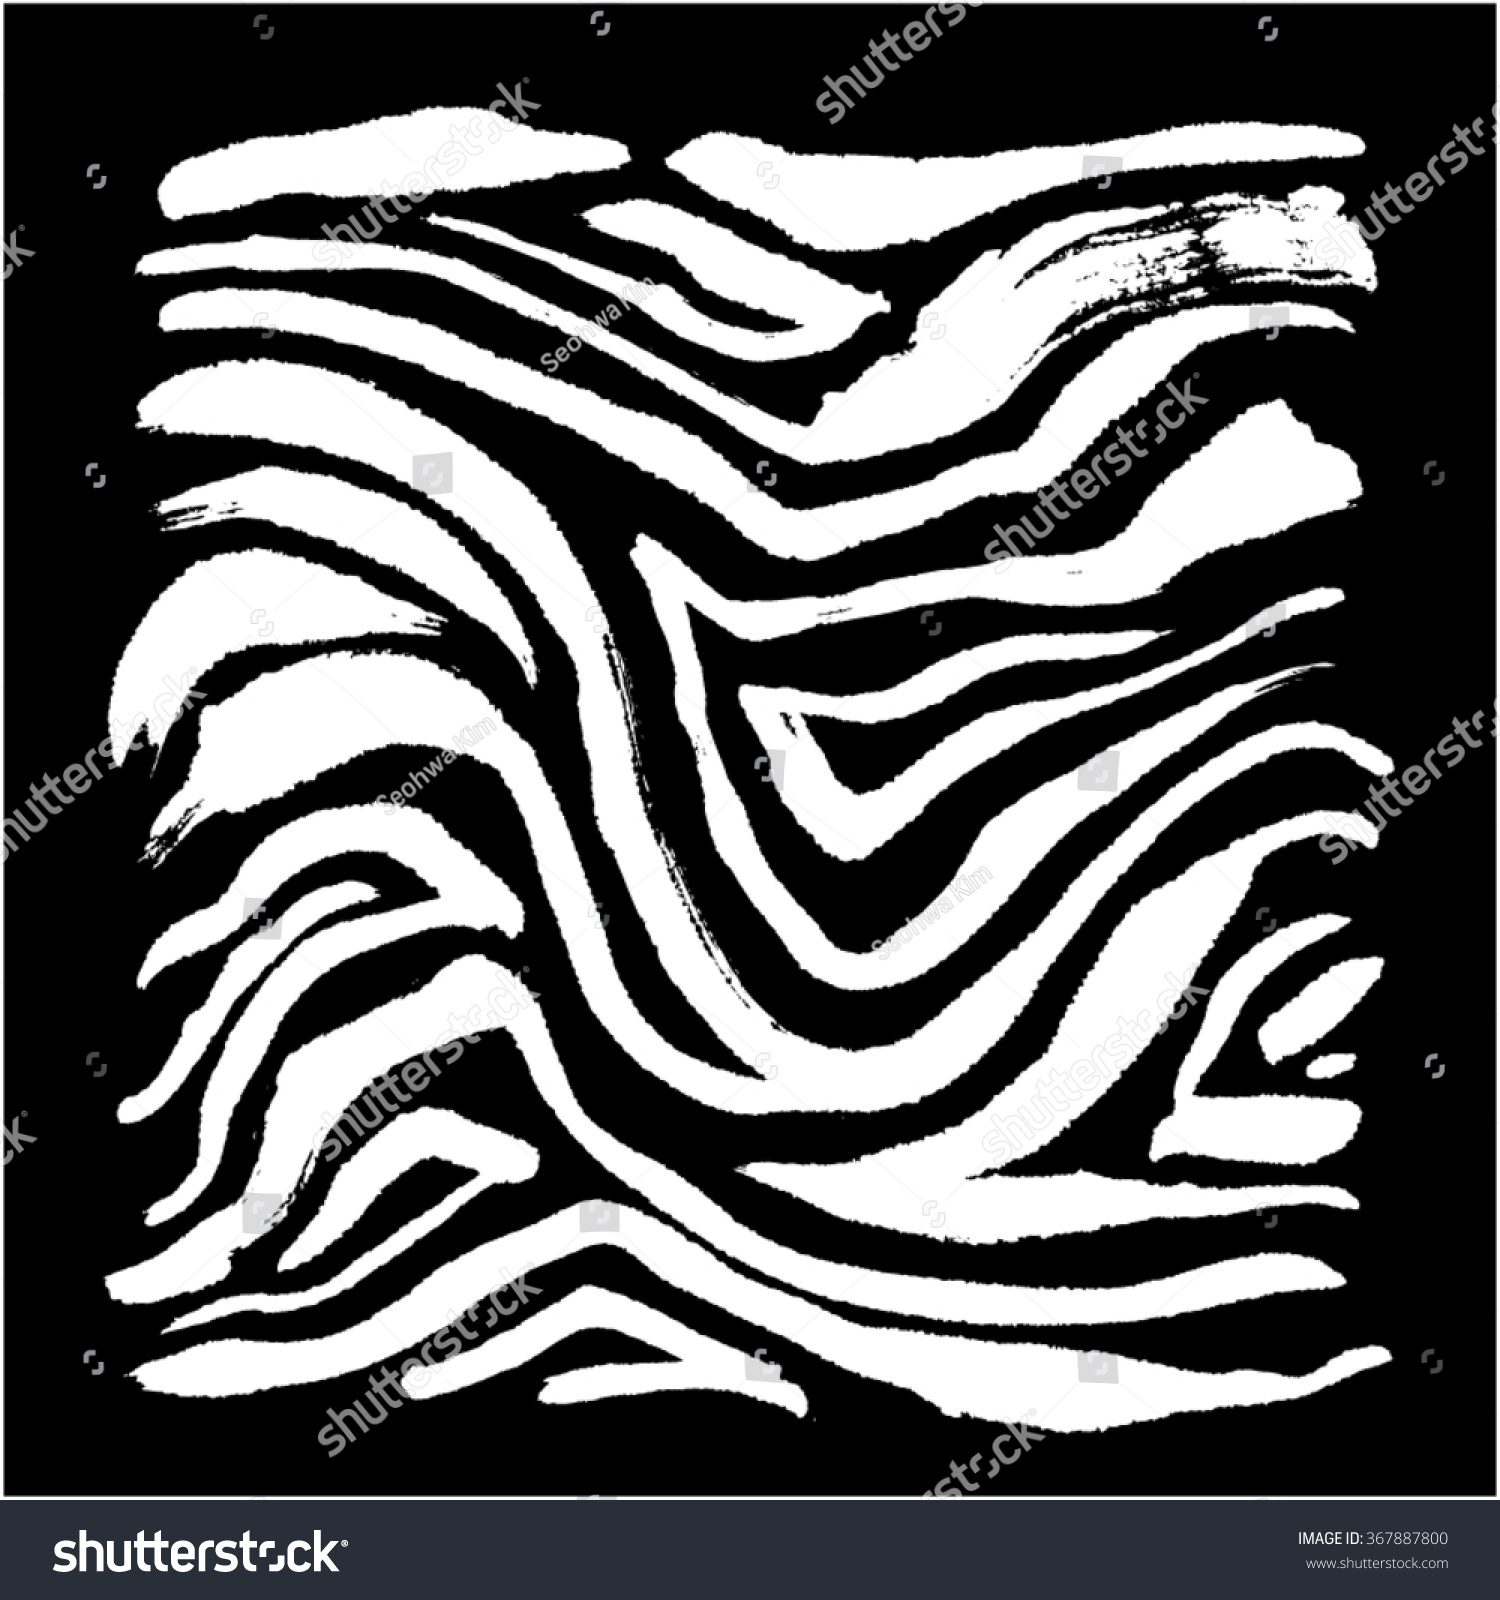 Hand Drawn Zebra Print Vector Stock Vector Royalty Free 367887800 Shutterstock 3880